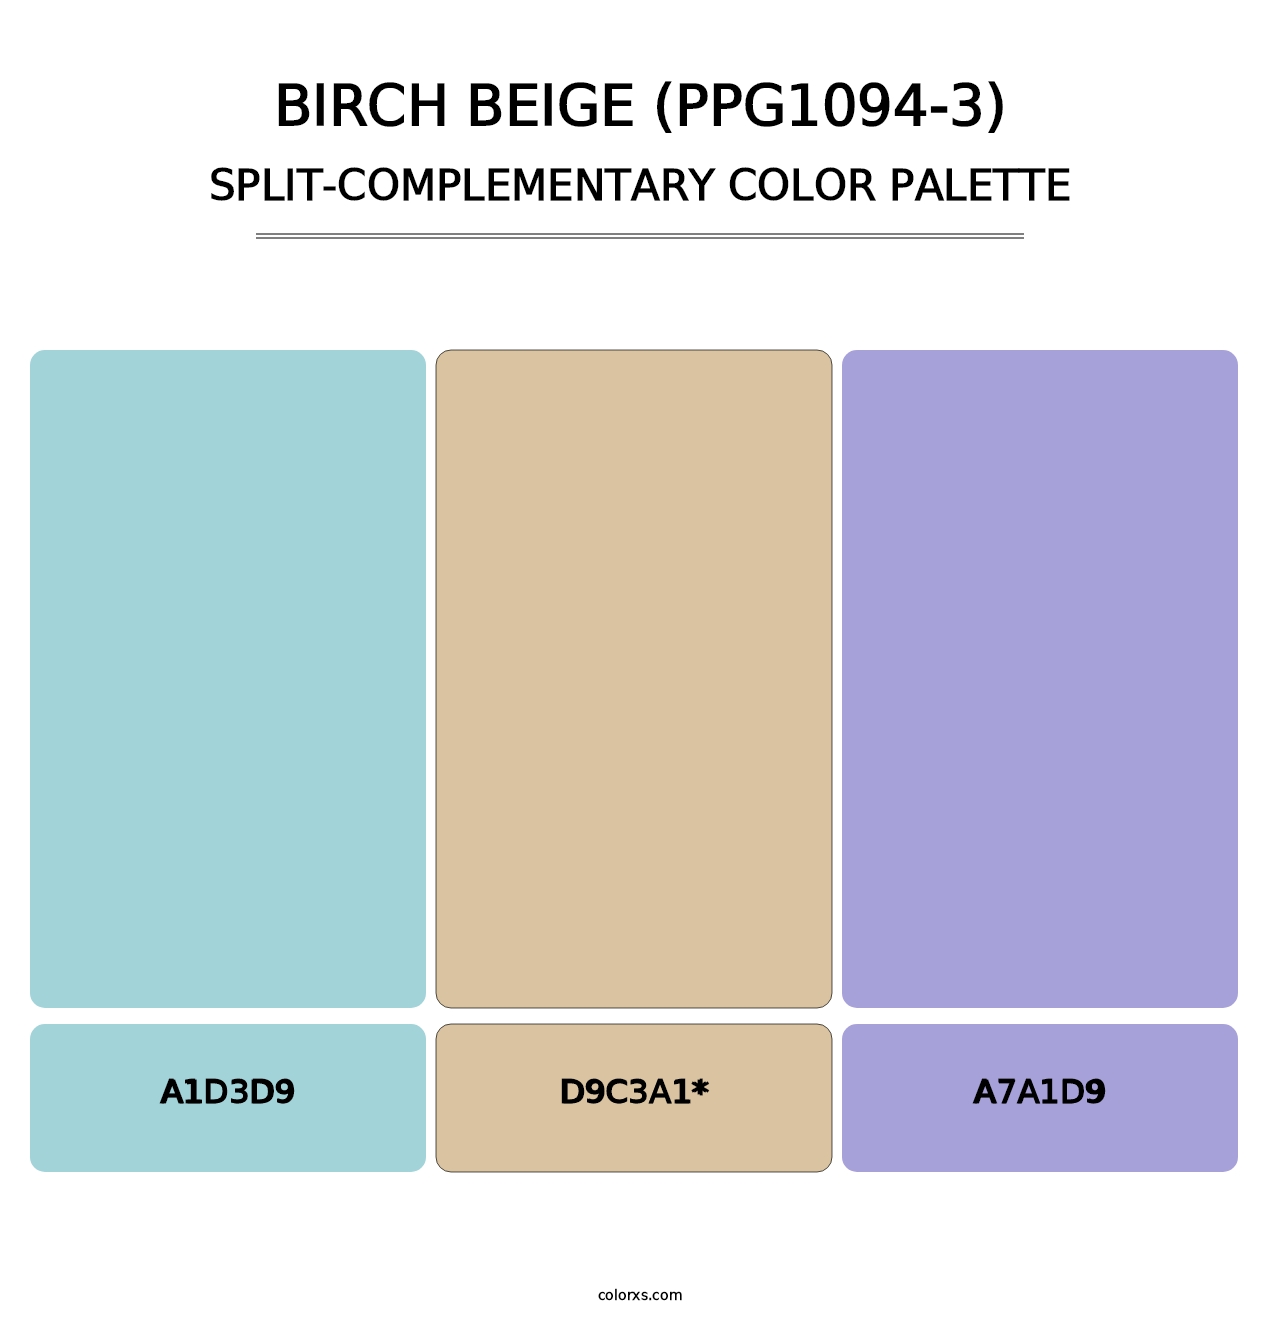 Birch Beige (PPG1094-3) - Split-Complementary Color Palette